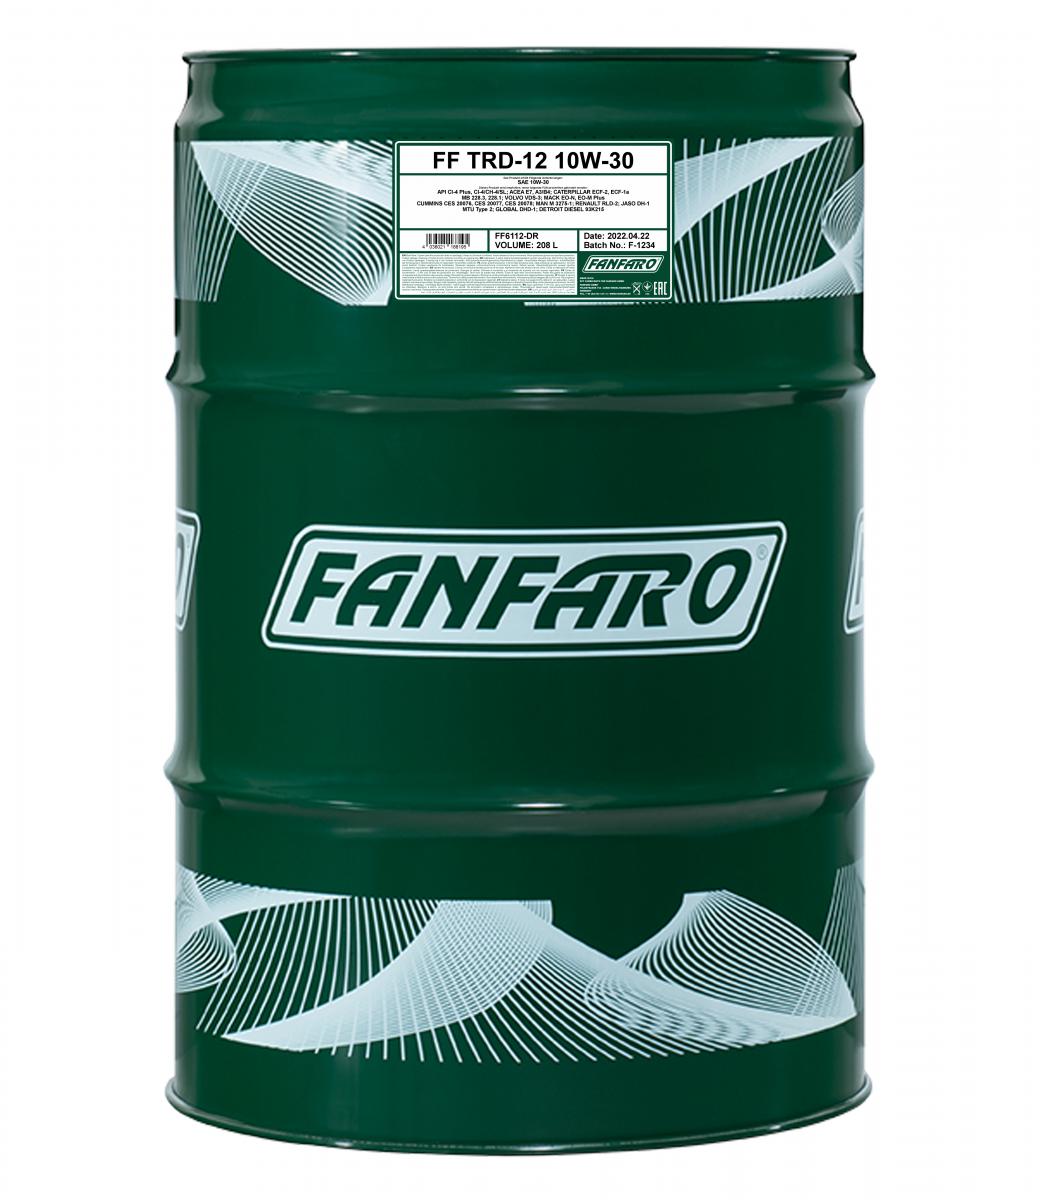 FANFARO TRD-12 10W-30